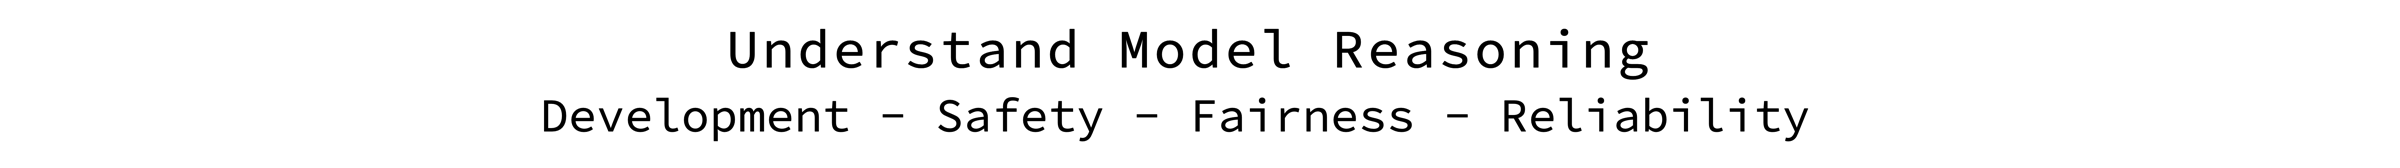 5.3-understand-model-reasoning